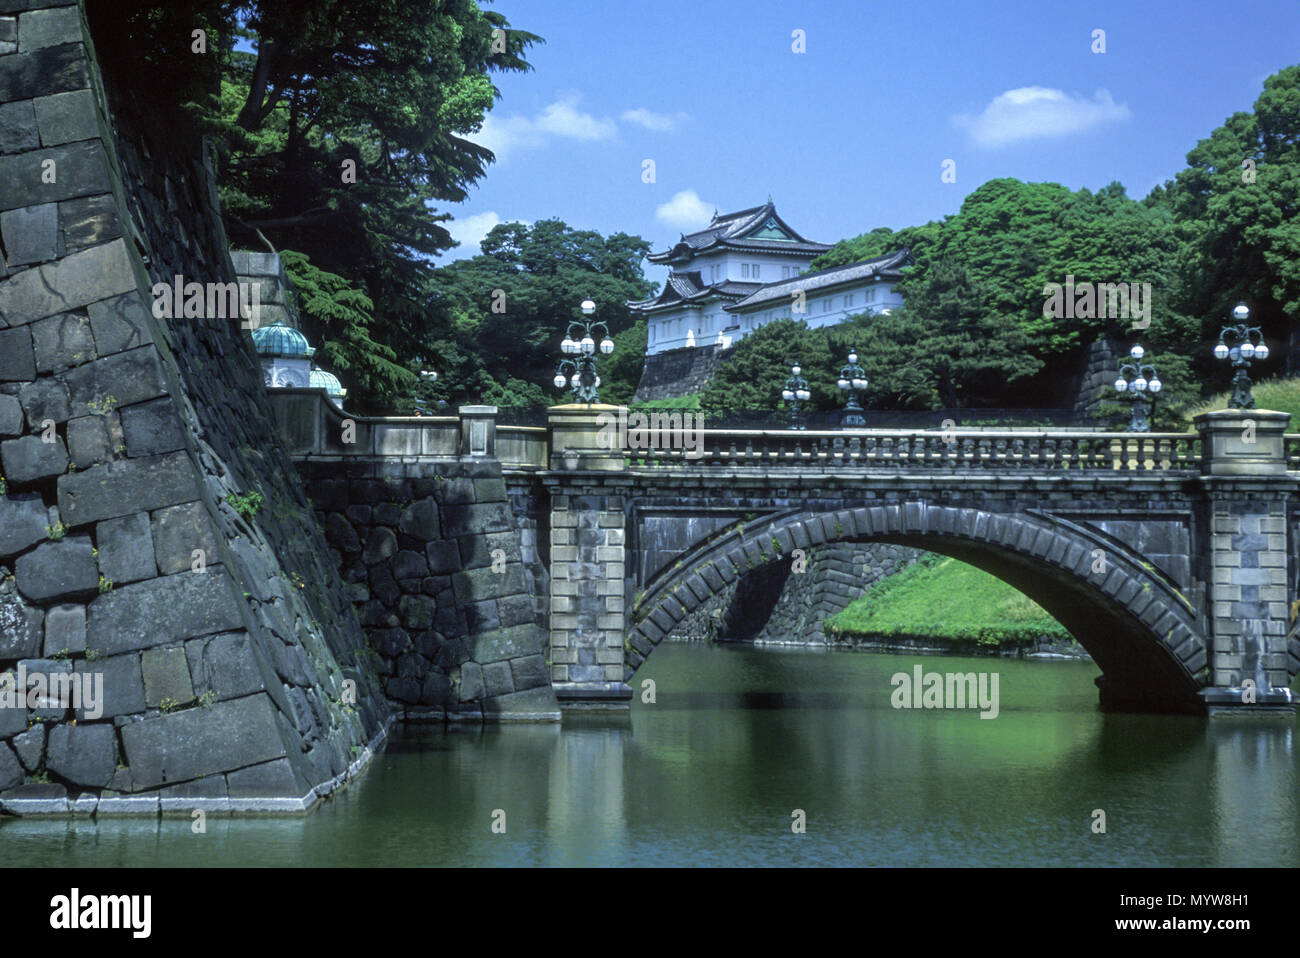 I1992 HISTORICAL IMPERIAL PALACE GARDENS NIJUBASHI BRIDGE TOKYO JAPAN Stock Photo